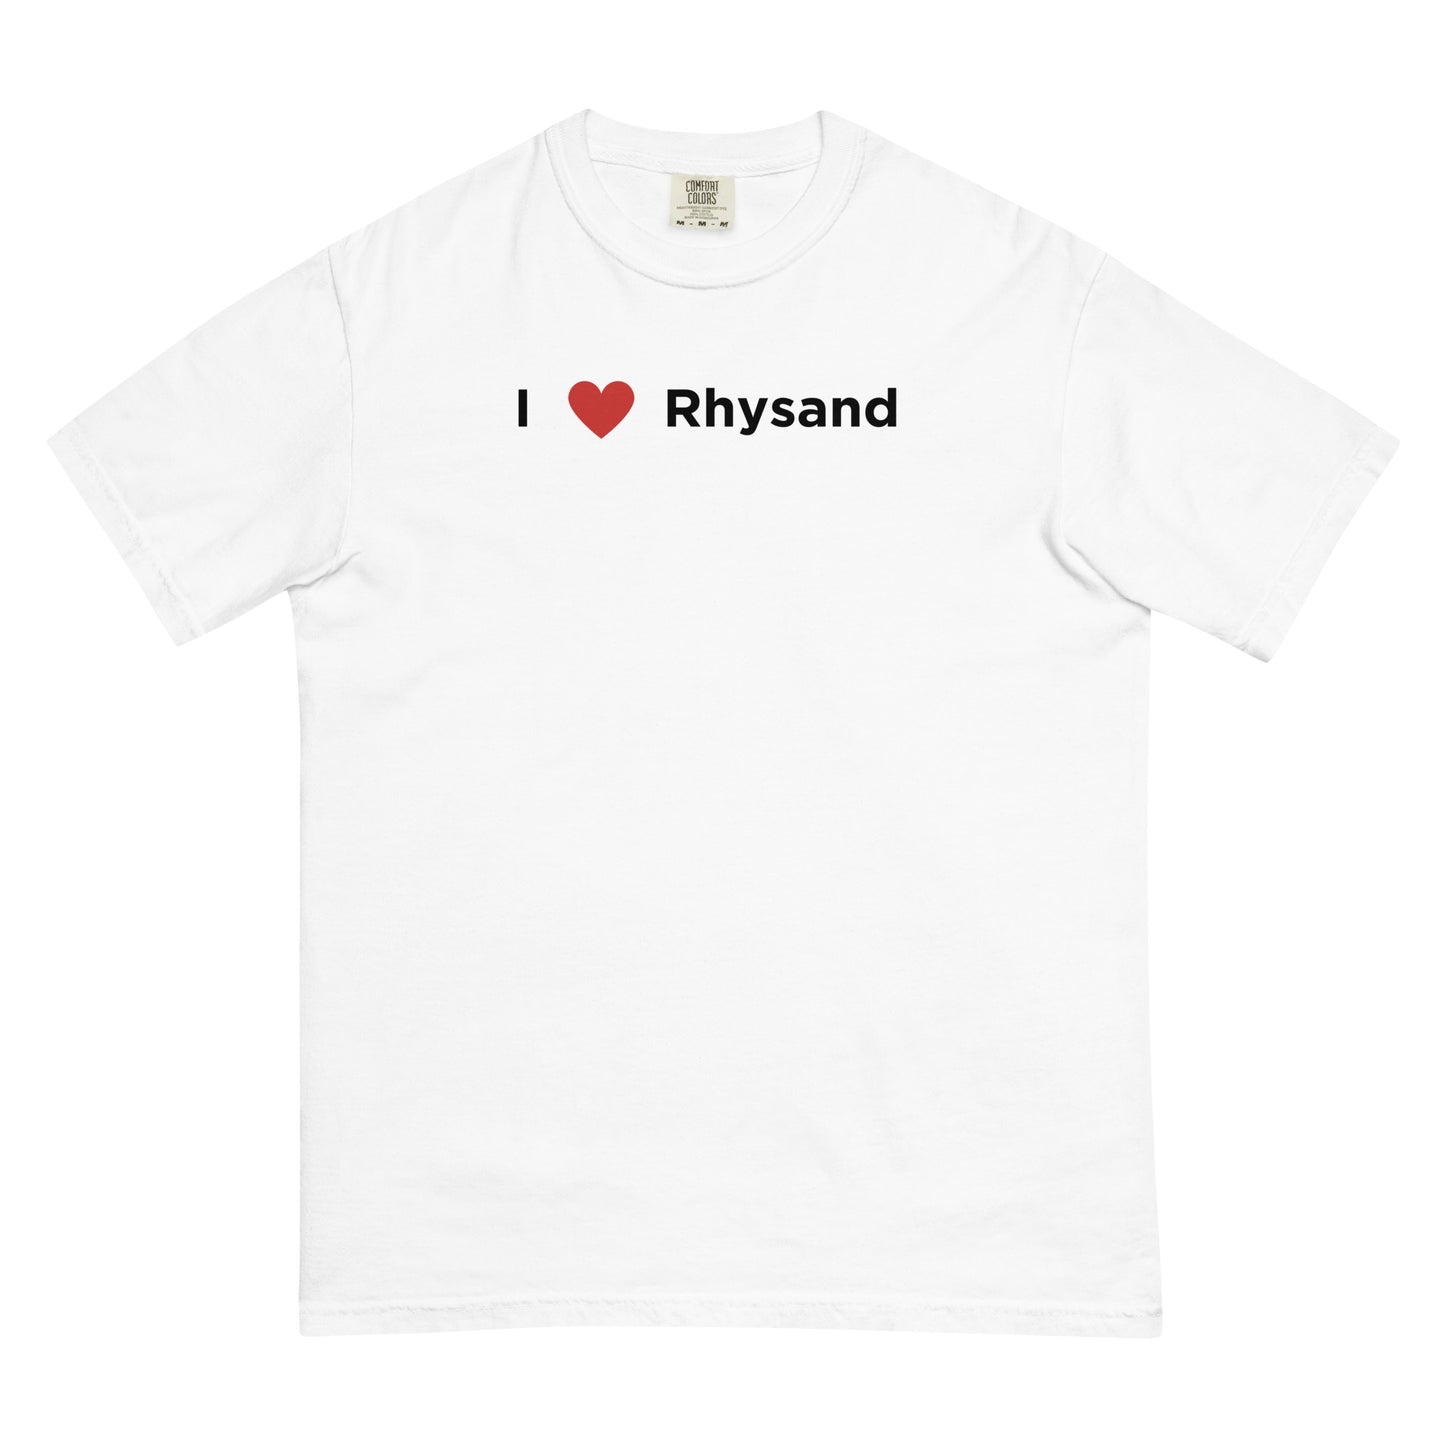 I Love Rhysand Tee